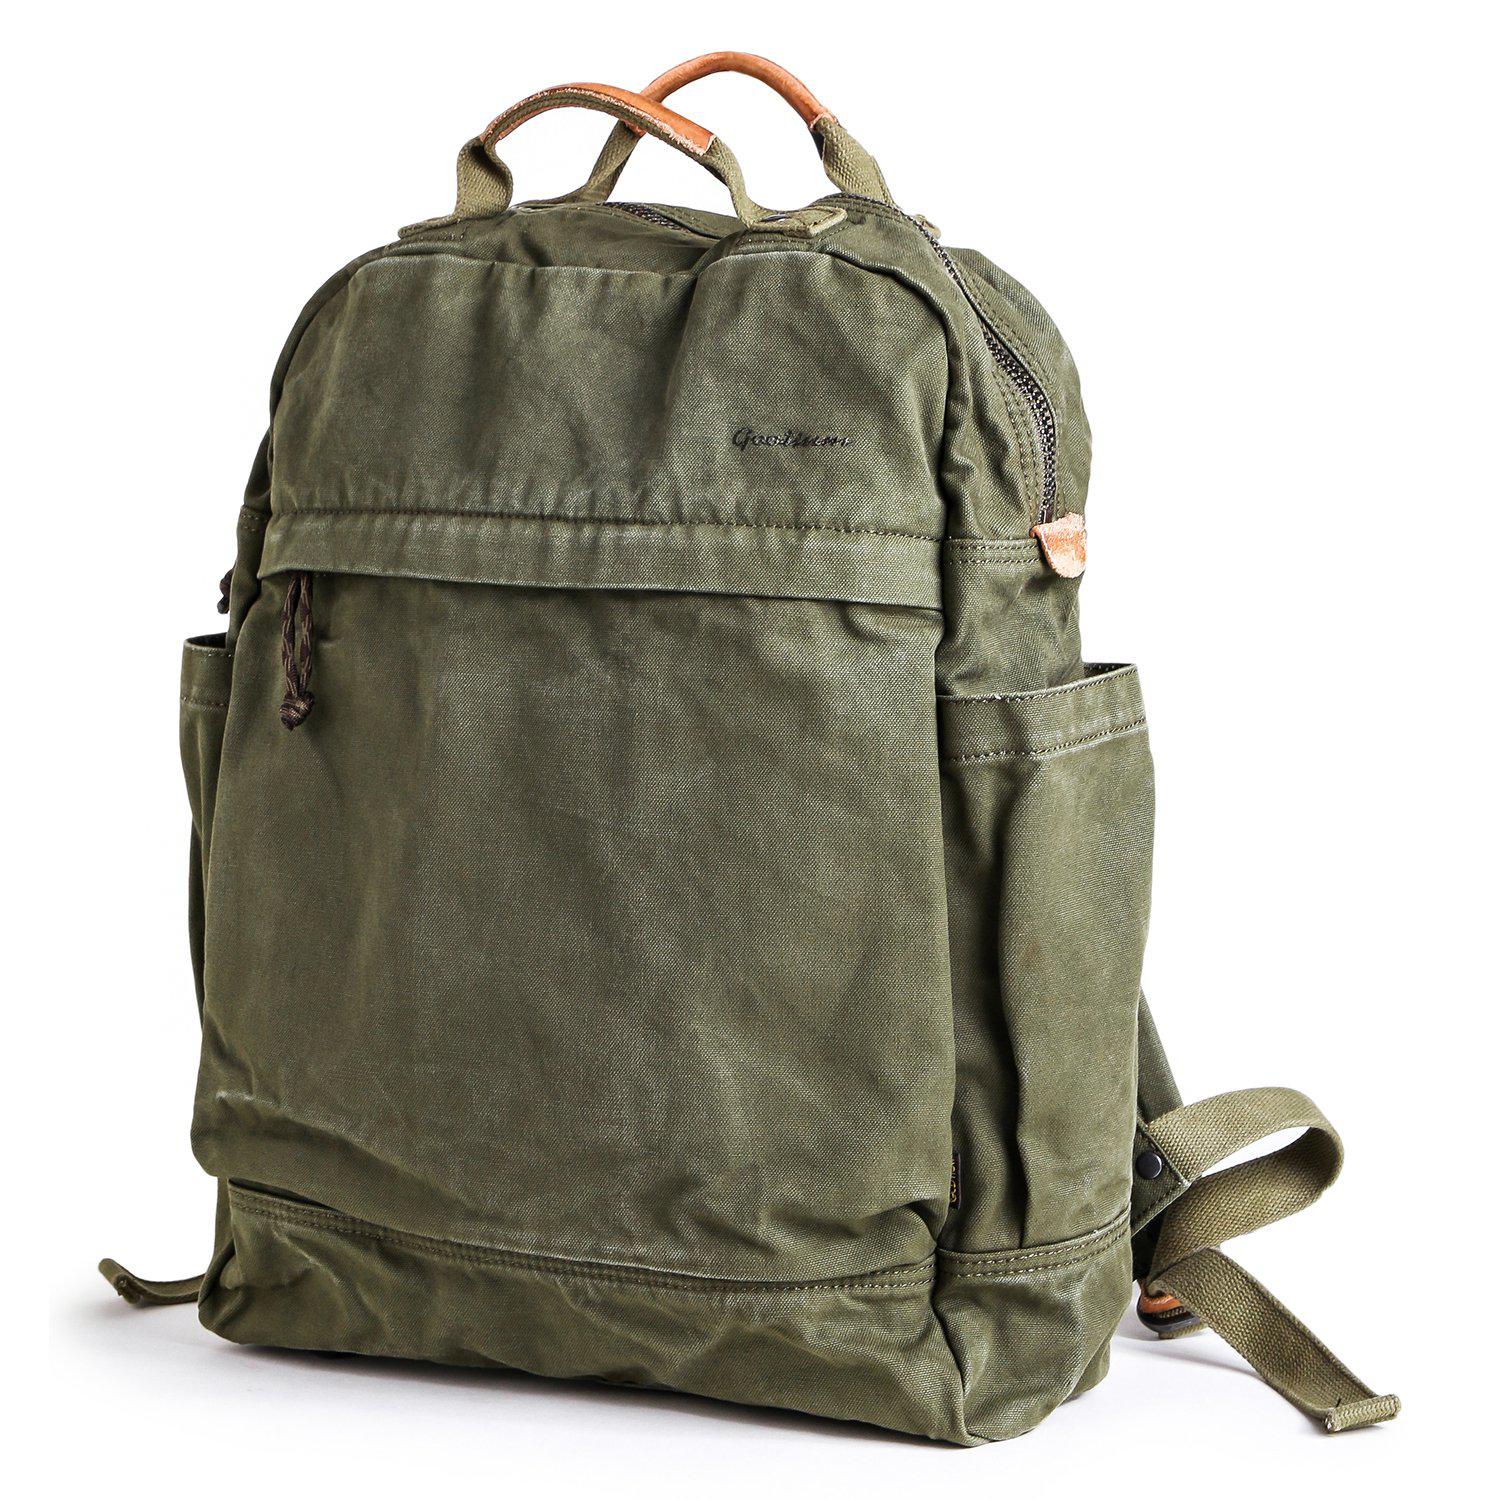 Gootium Canvas Backpack - Vintage Military Rucksack Travel Dayack, Green